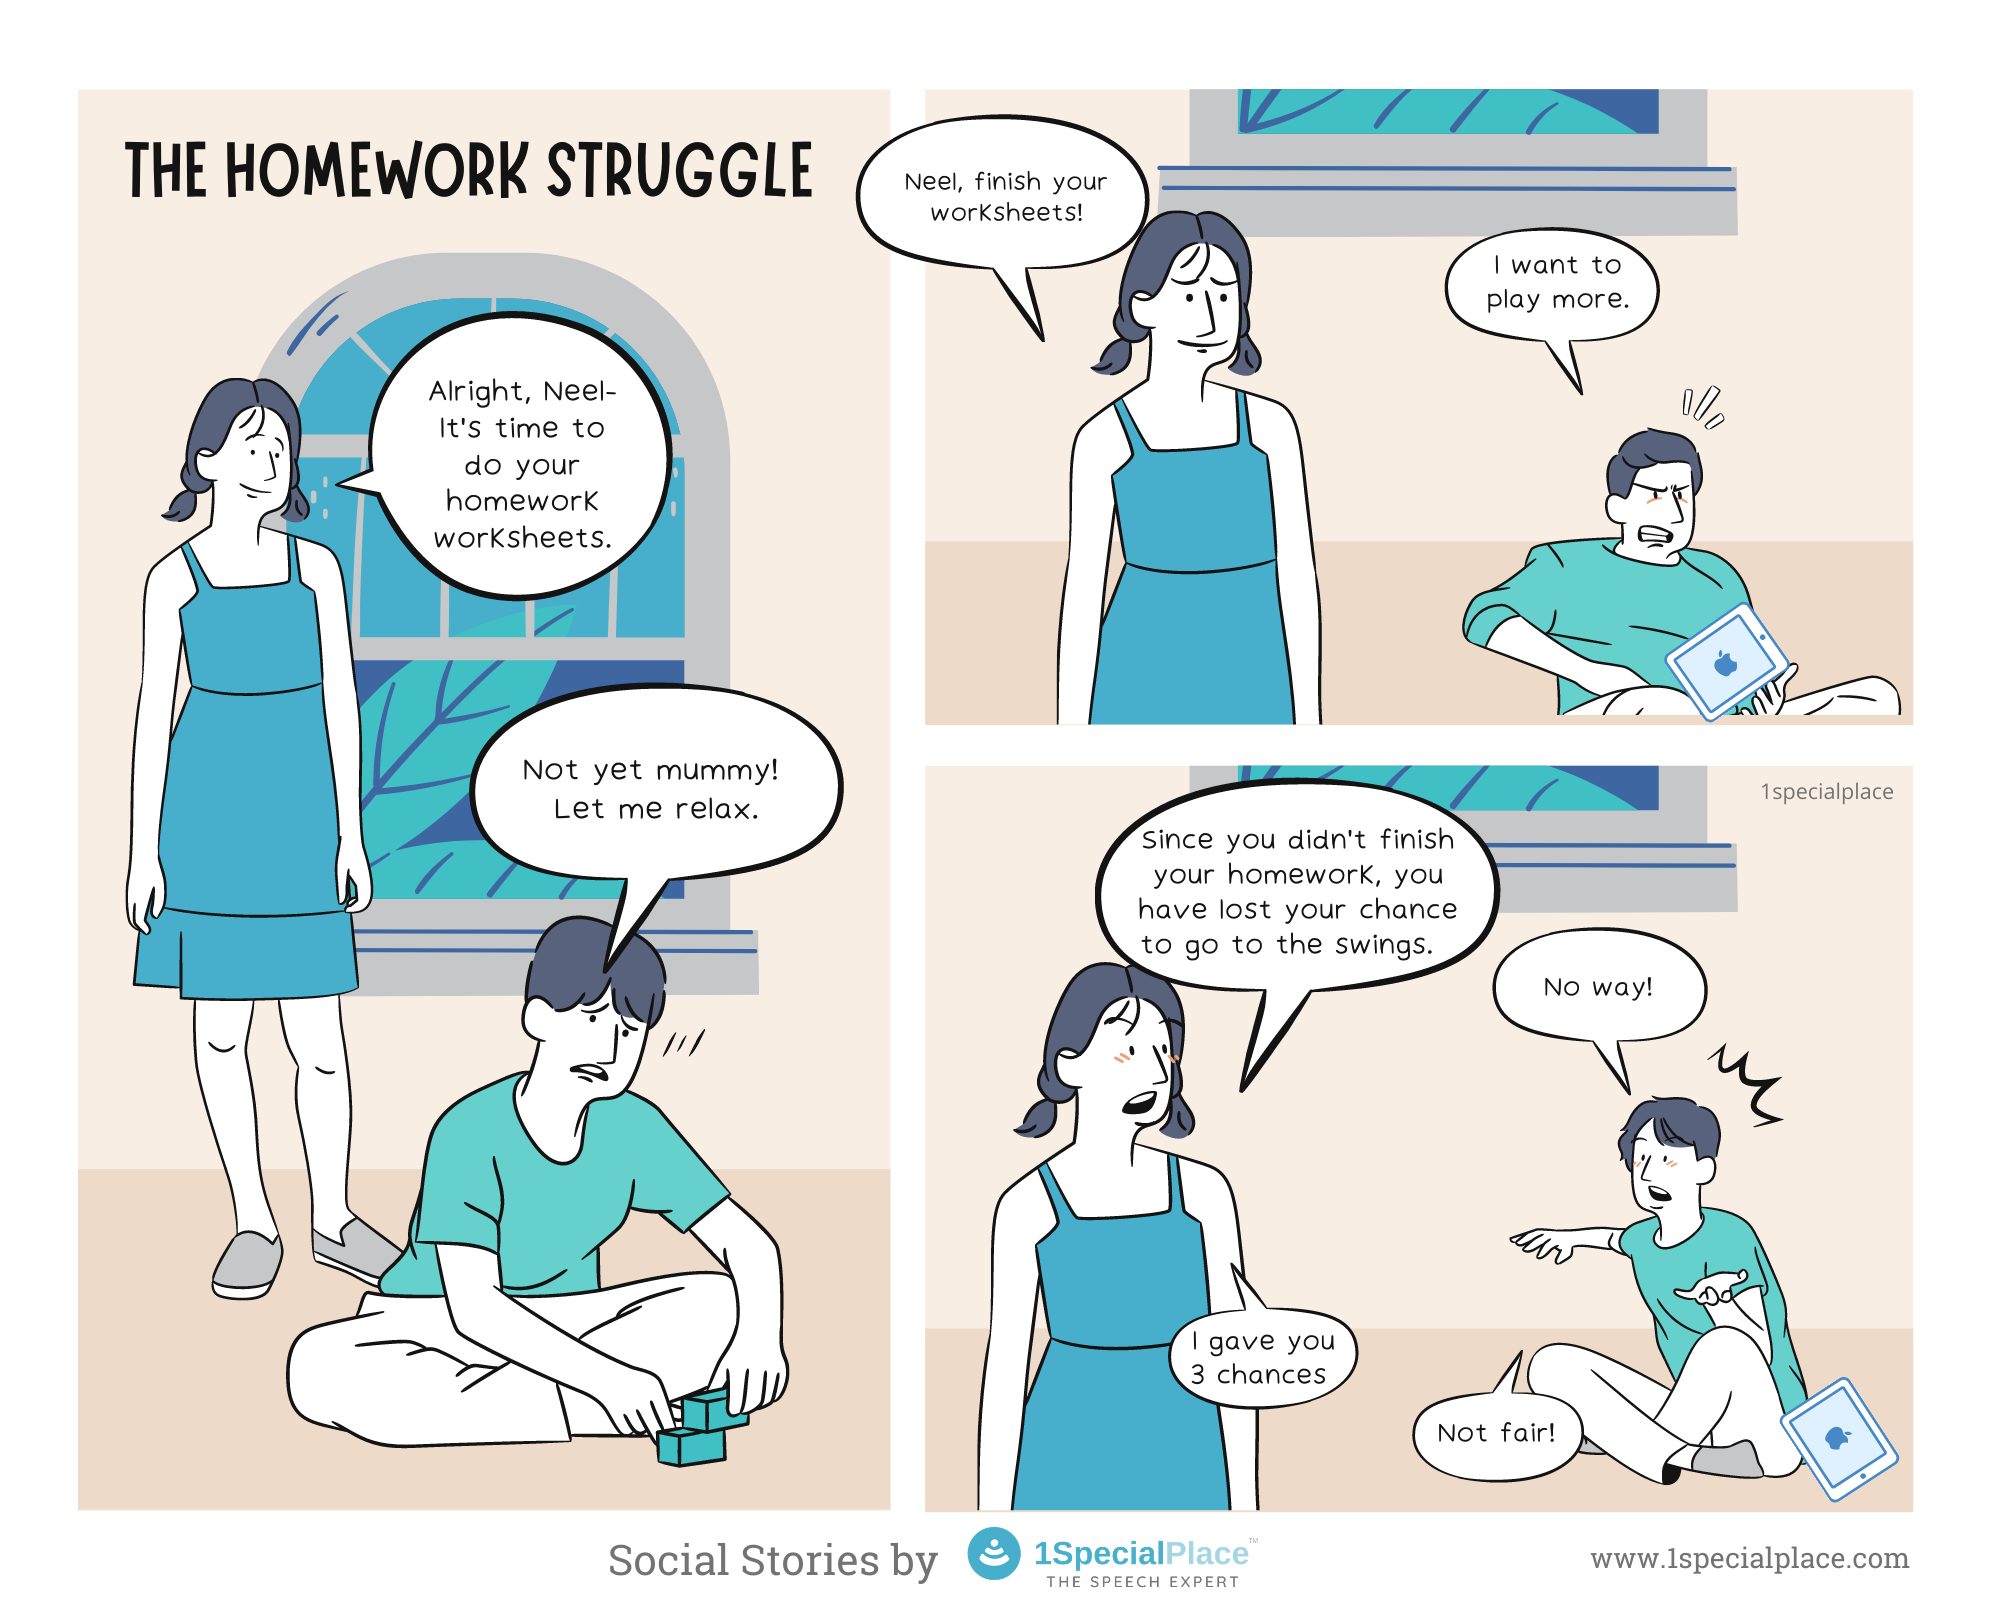 The Homework Struggle - A short story